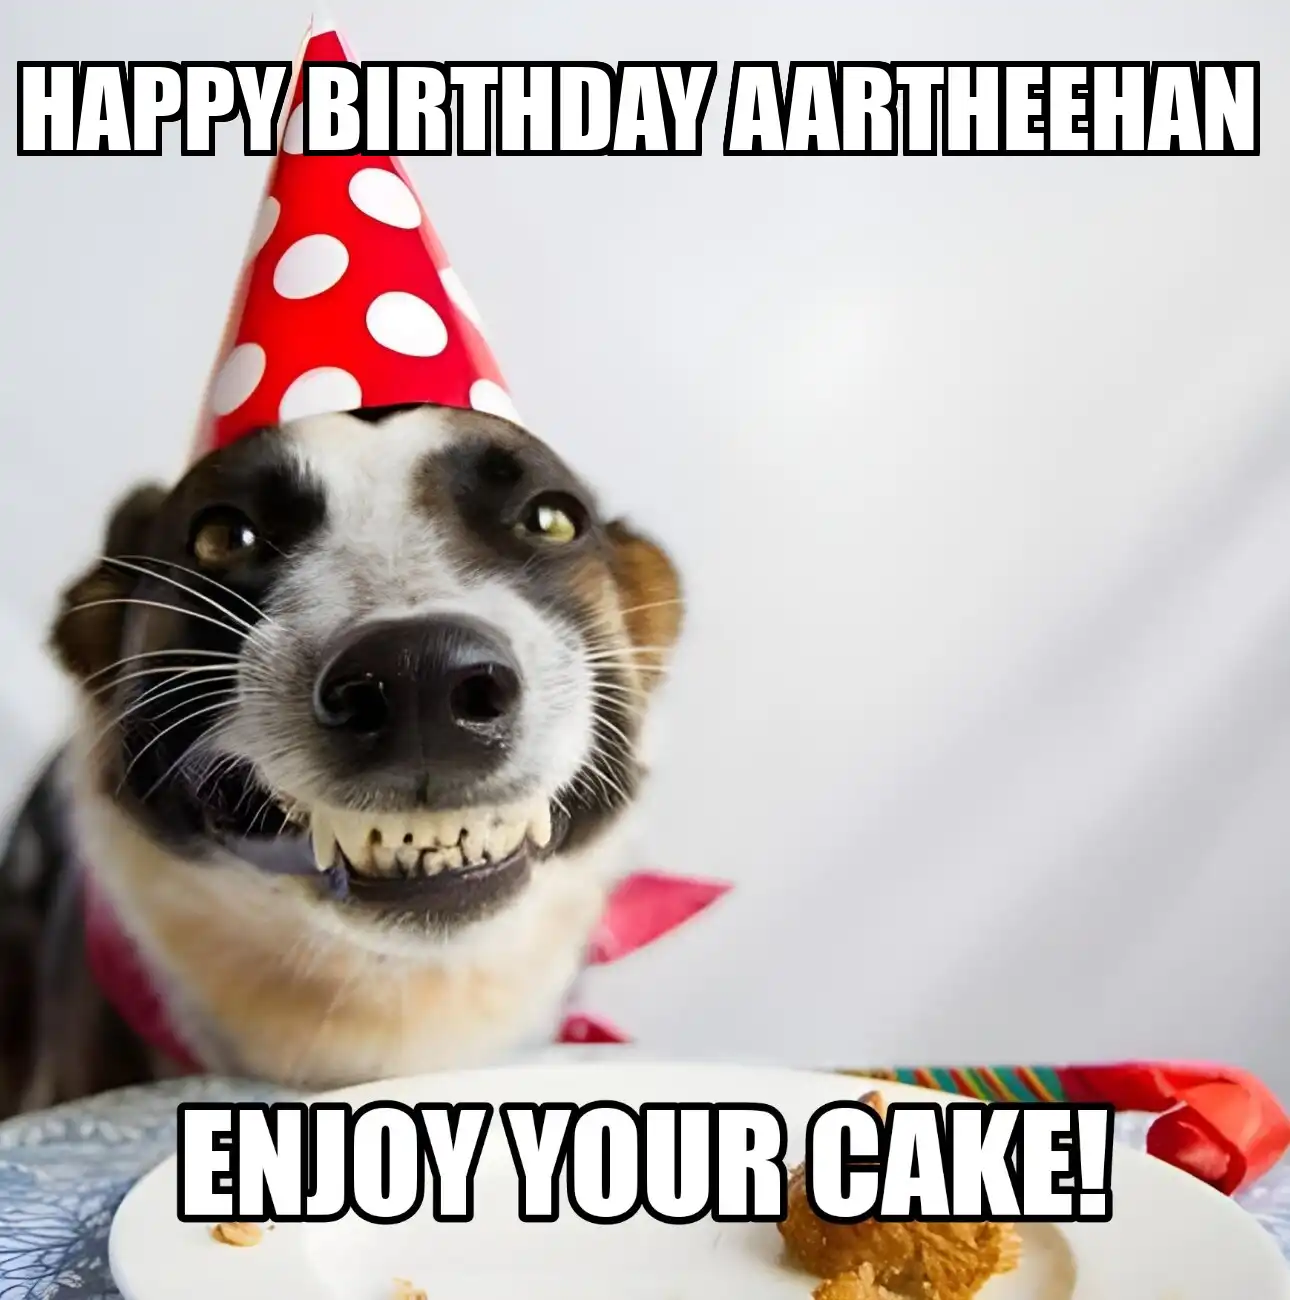 Happy Birthday Aartheehan Enjoy Your Cake Dog Meme